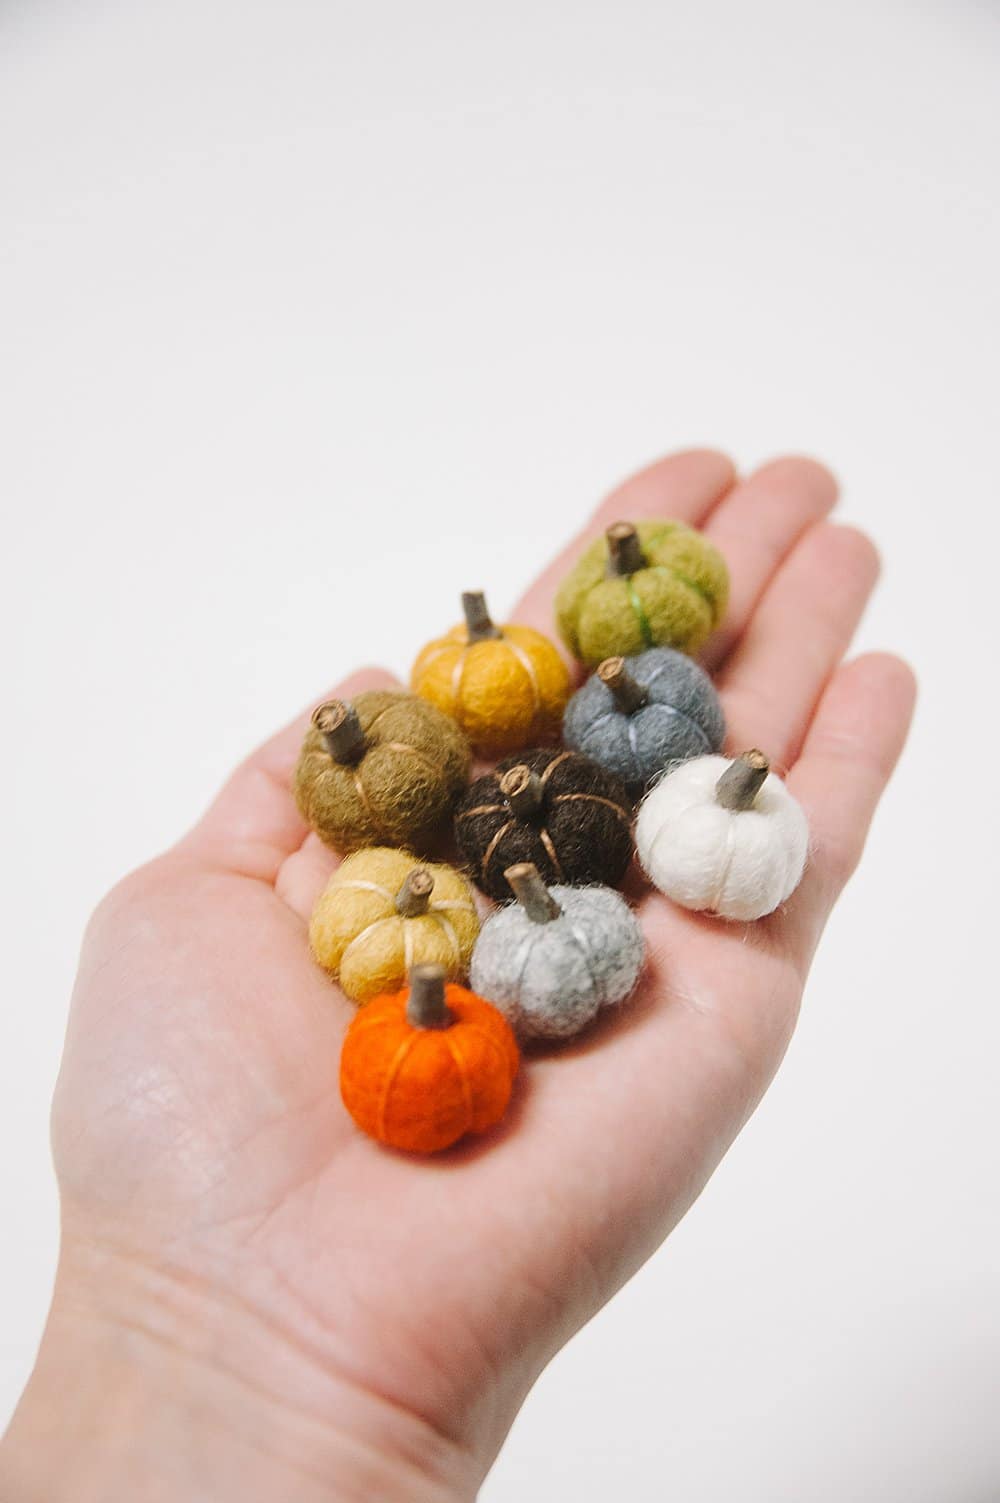 How to Make Mini Felt Ball Pumpkins